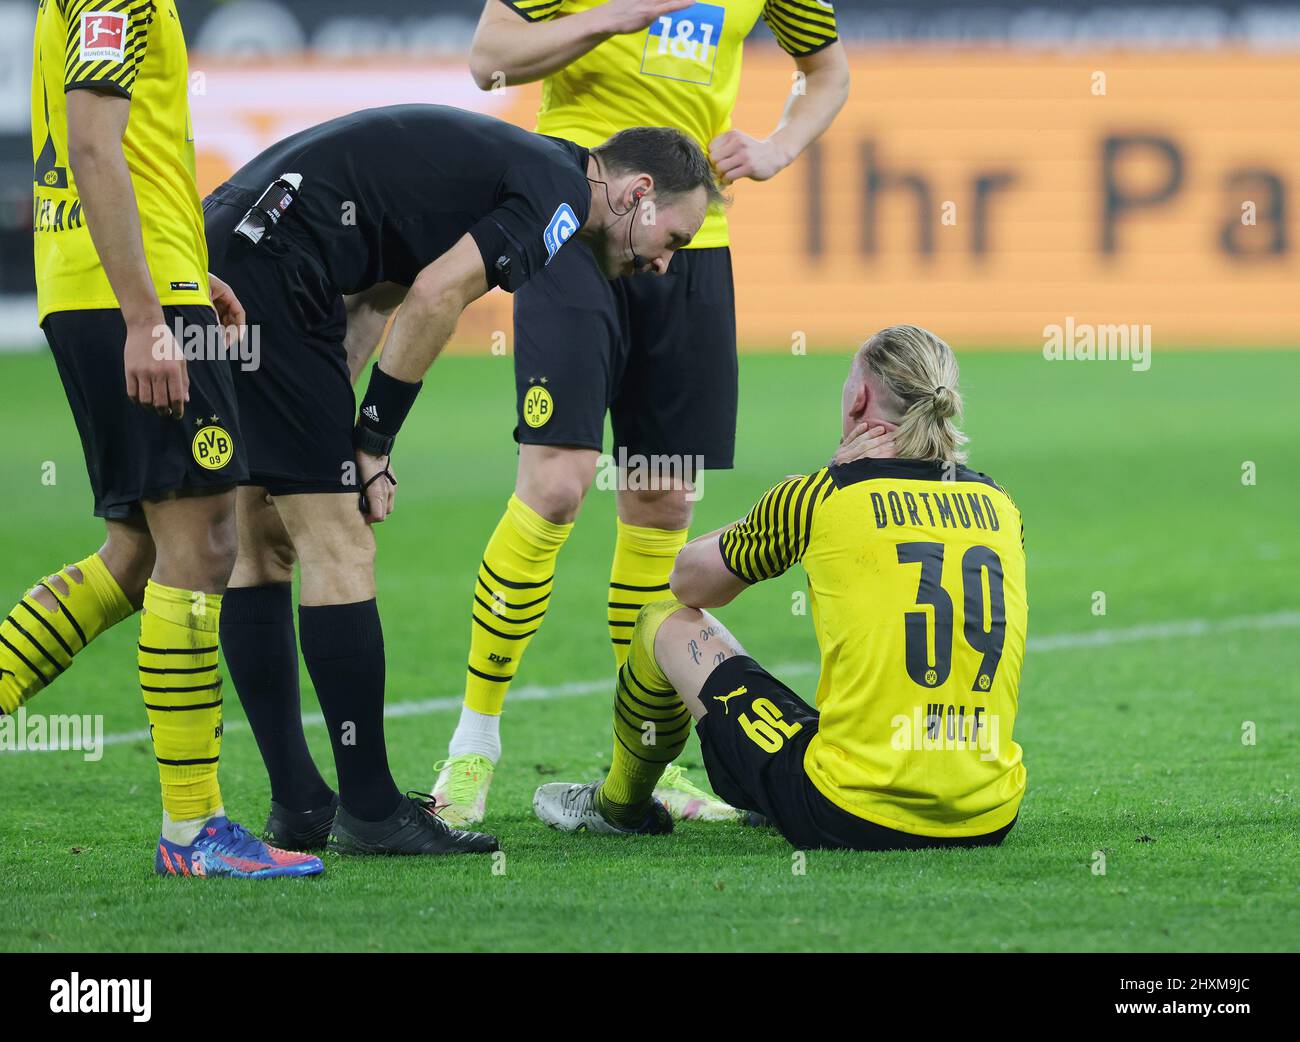 Borussia dortmund gegen arminia bielefeld -Fotos und -Bildmaterial in hoher  Auflösung – Alamy